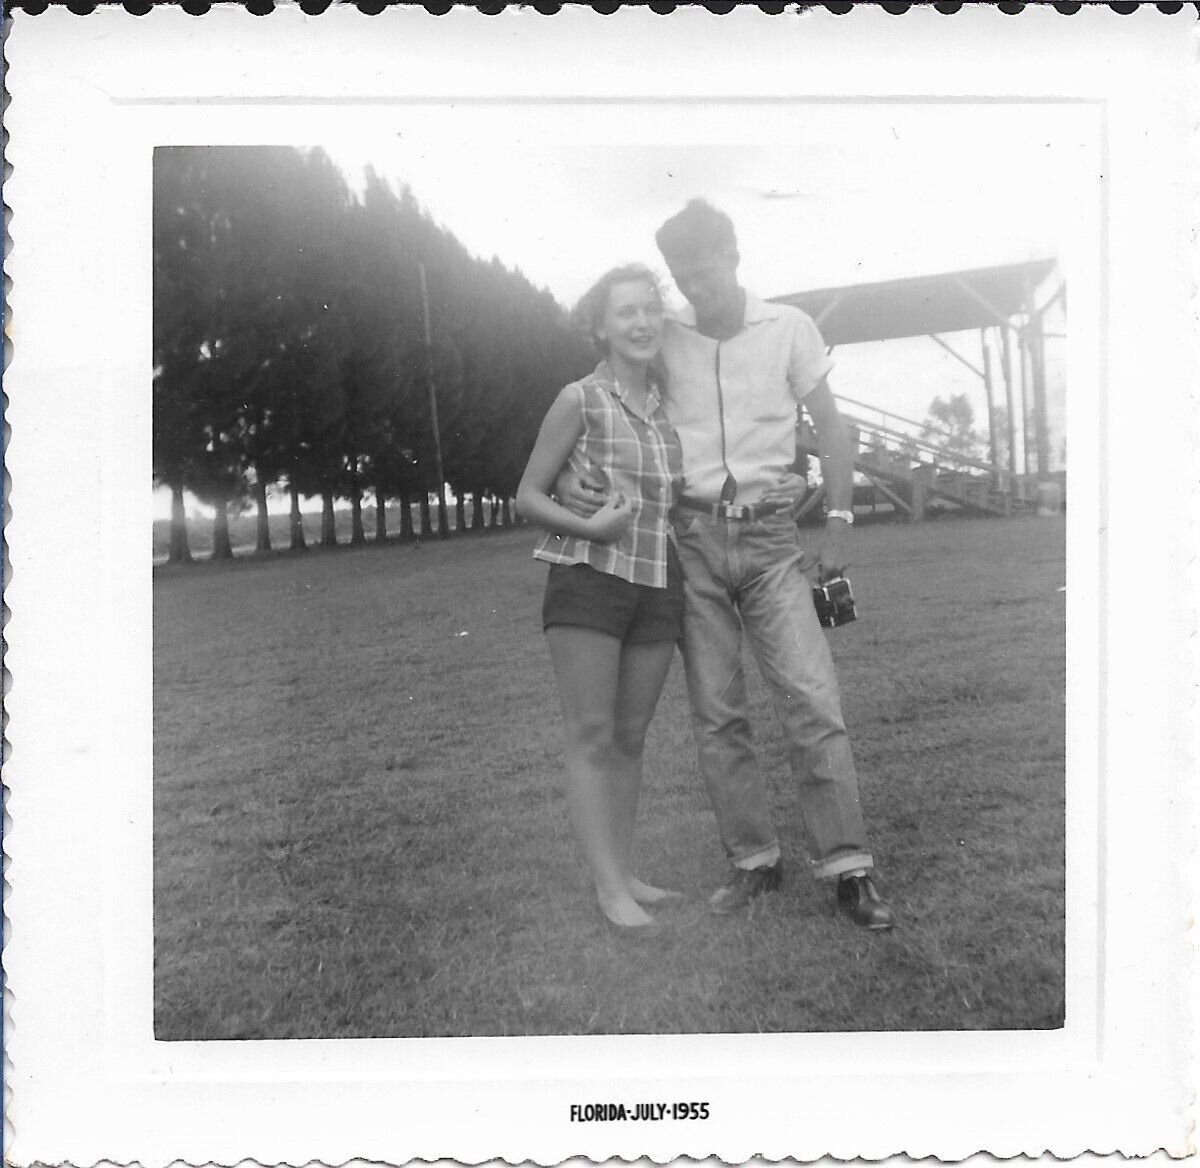 Young Couple Photograph Outdoors Vintage Fashion 1955 Florida 4 x 4